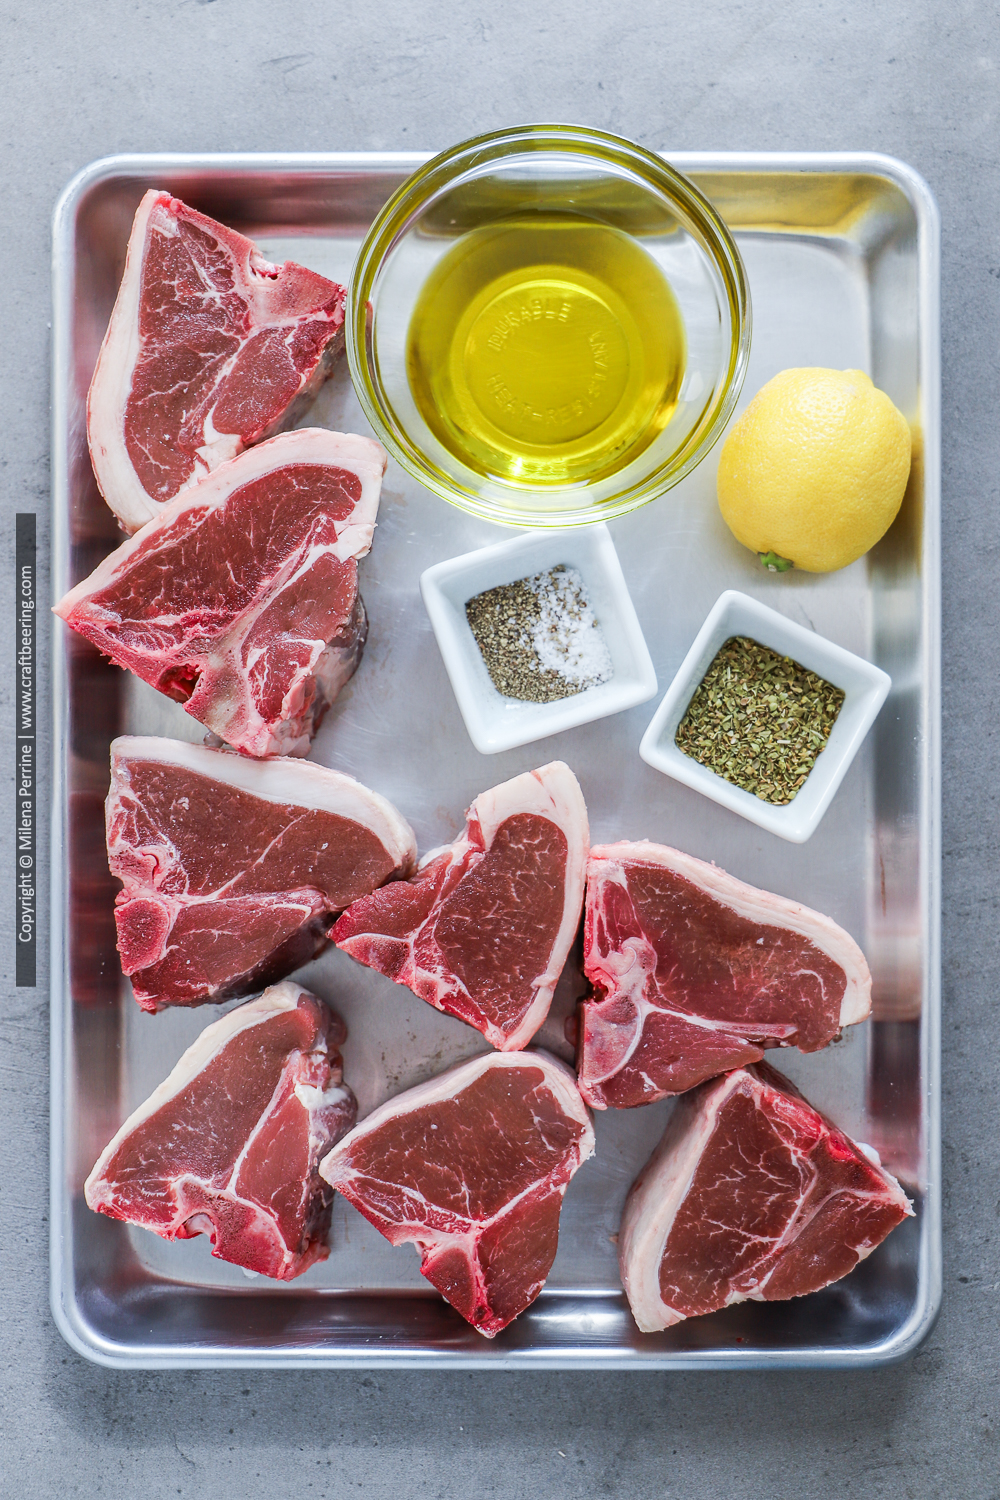 Raw loin lamb chops (lamb T-bones) and ingredients for marinade